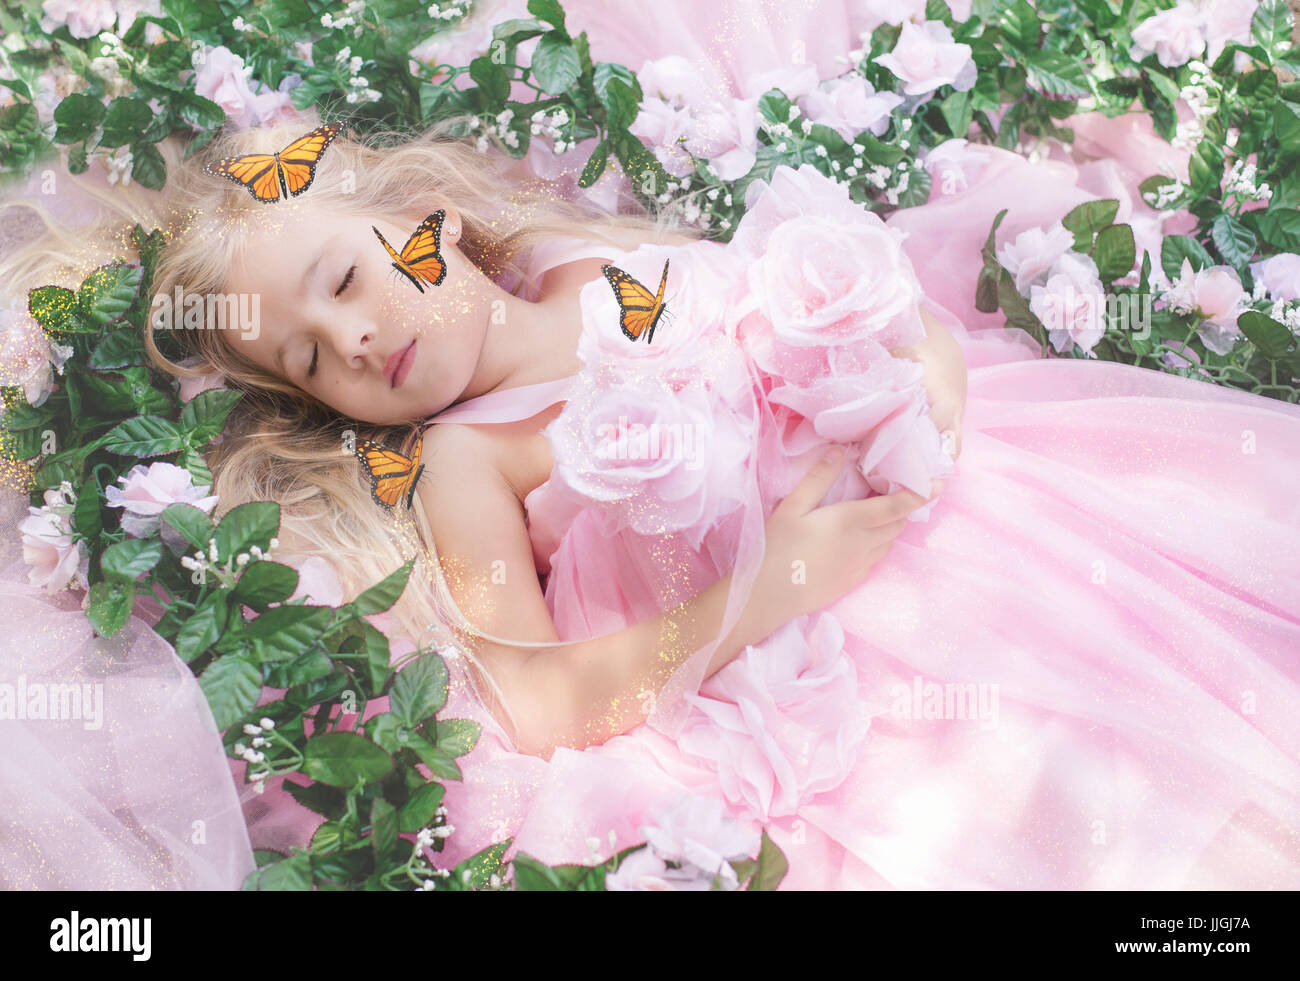 Girl lying amongst flowers sleeping with butterflies flying around her, California, USA Stock Photo